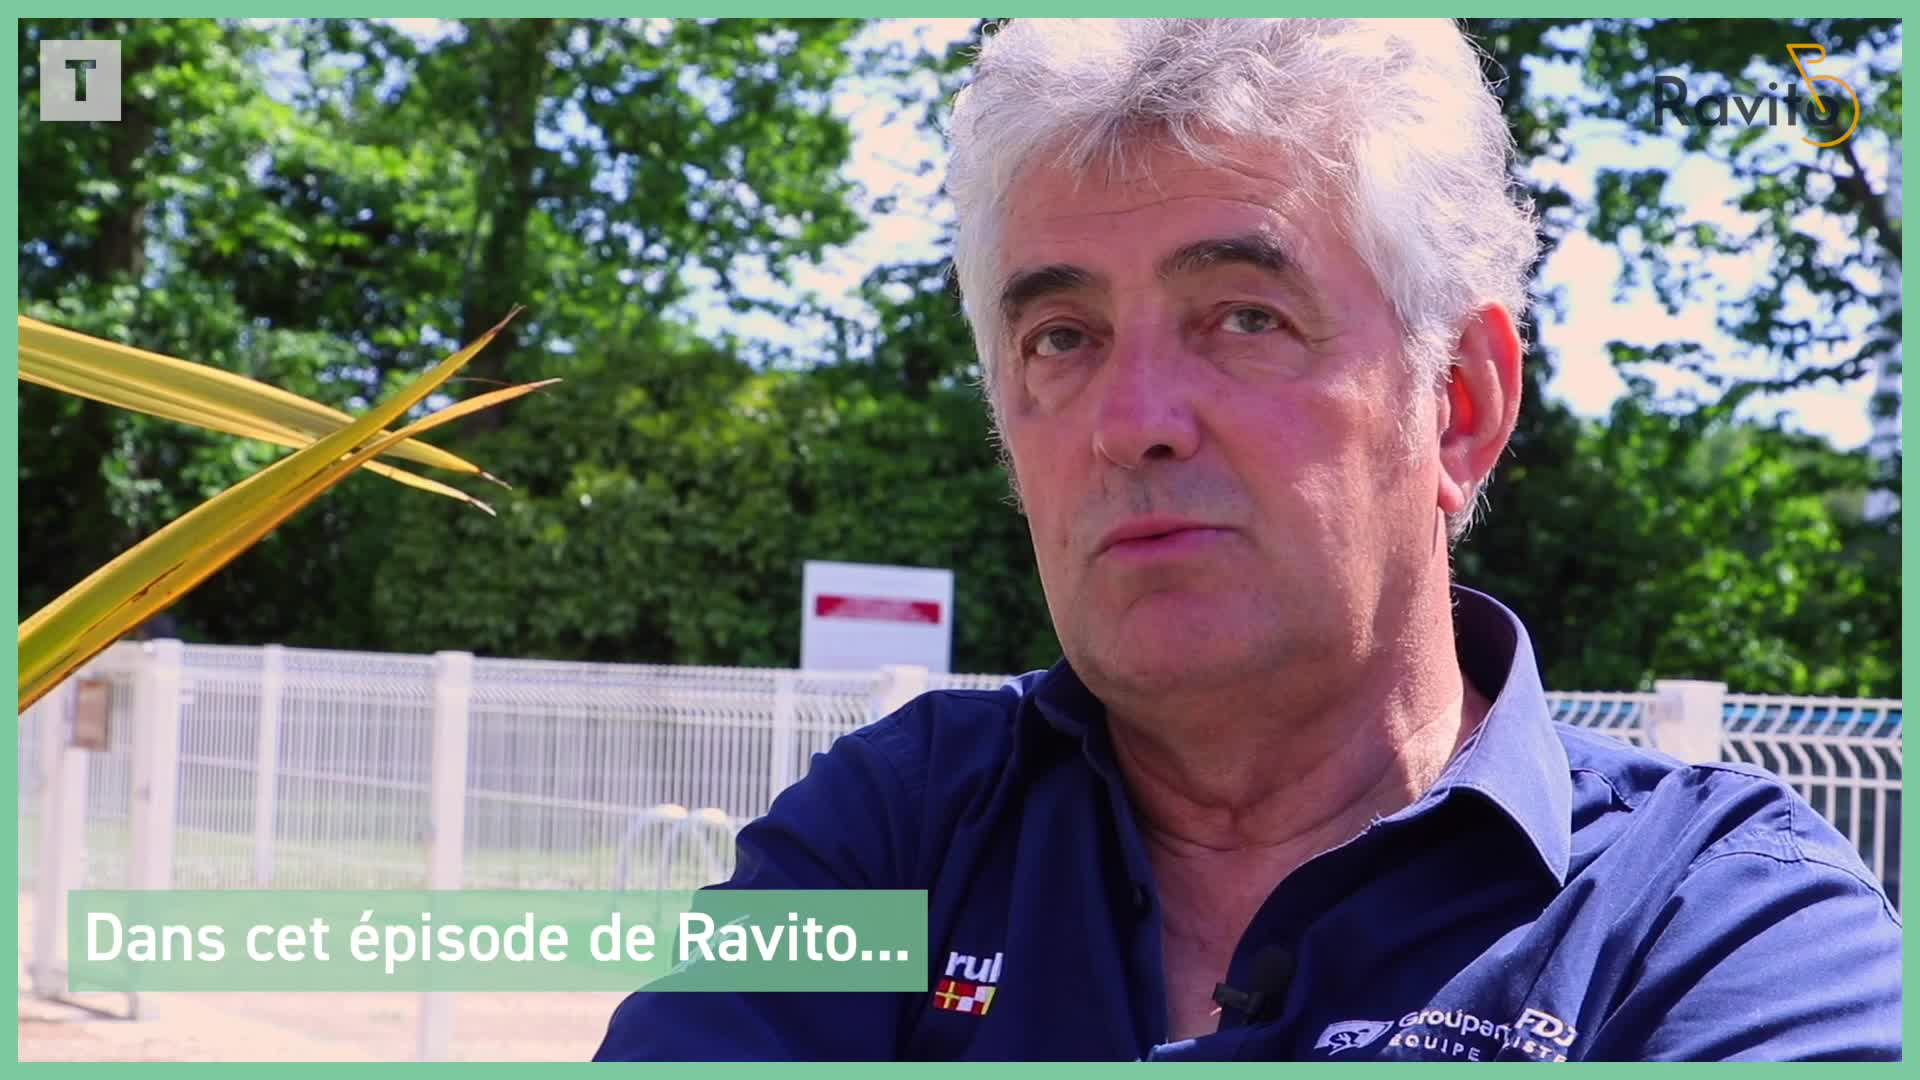 Cyclisme. Ravito #68 : Gaudu, Madouas et les « fantastiques », la grande interview de Madiot 2/2 [Vidéo]